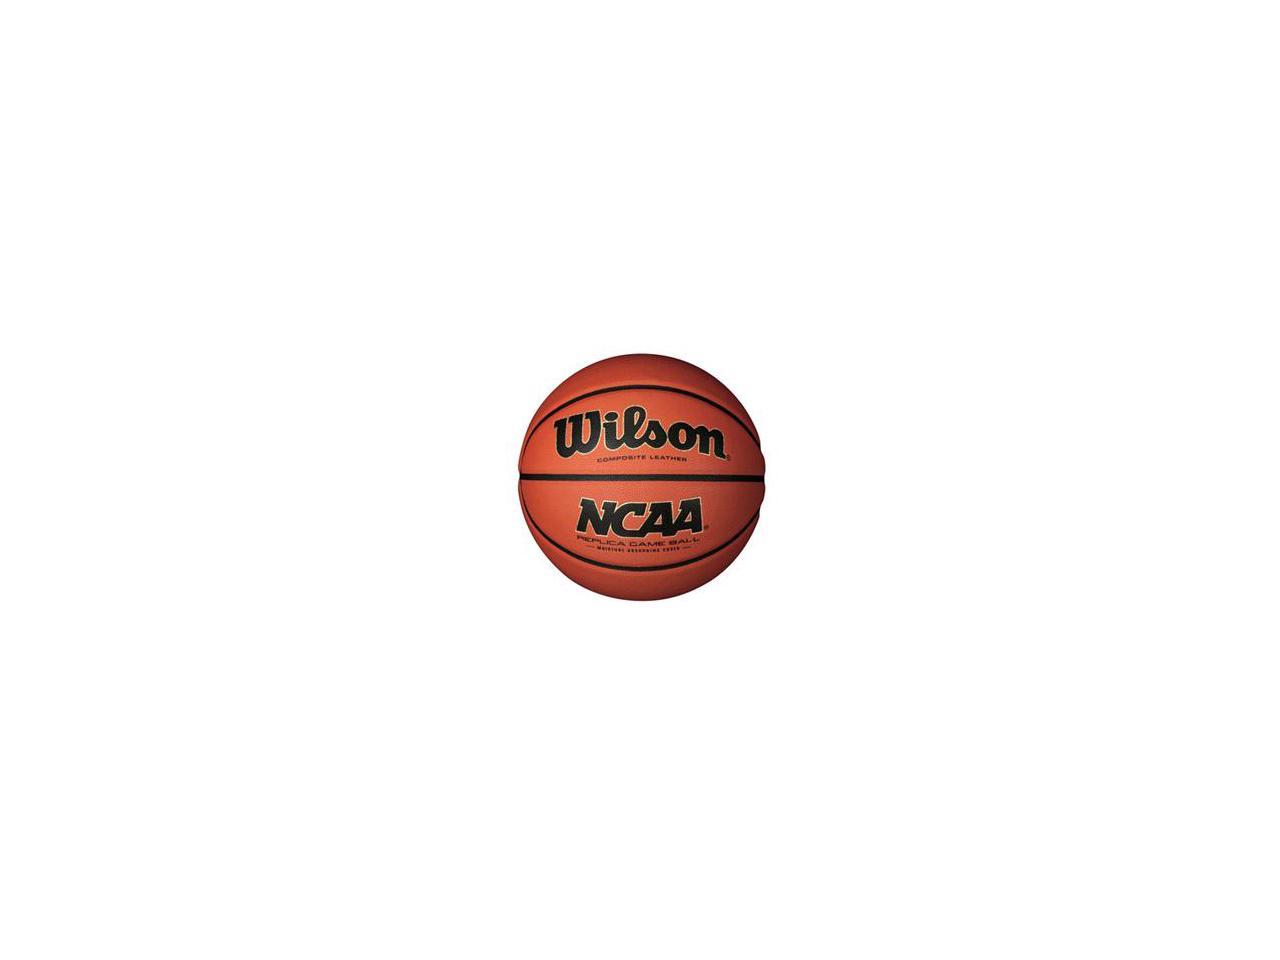 Wilson Basketball - 1 - Newegg.com